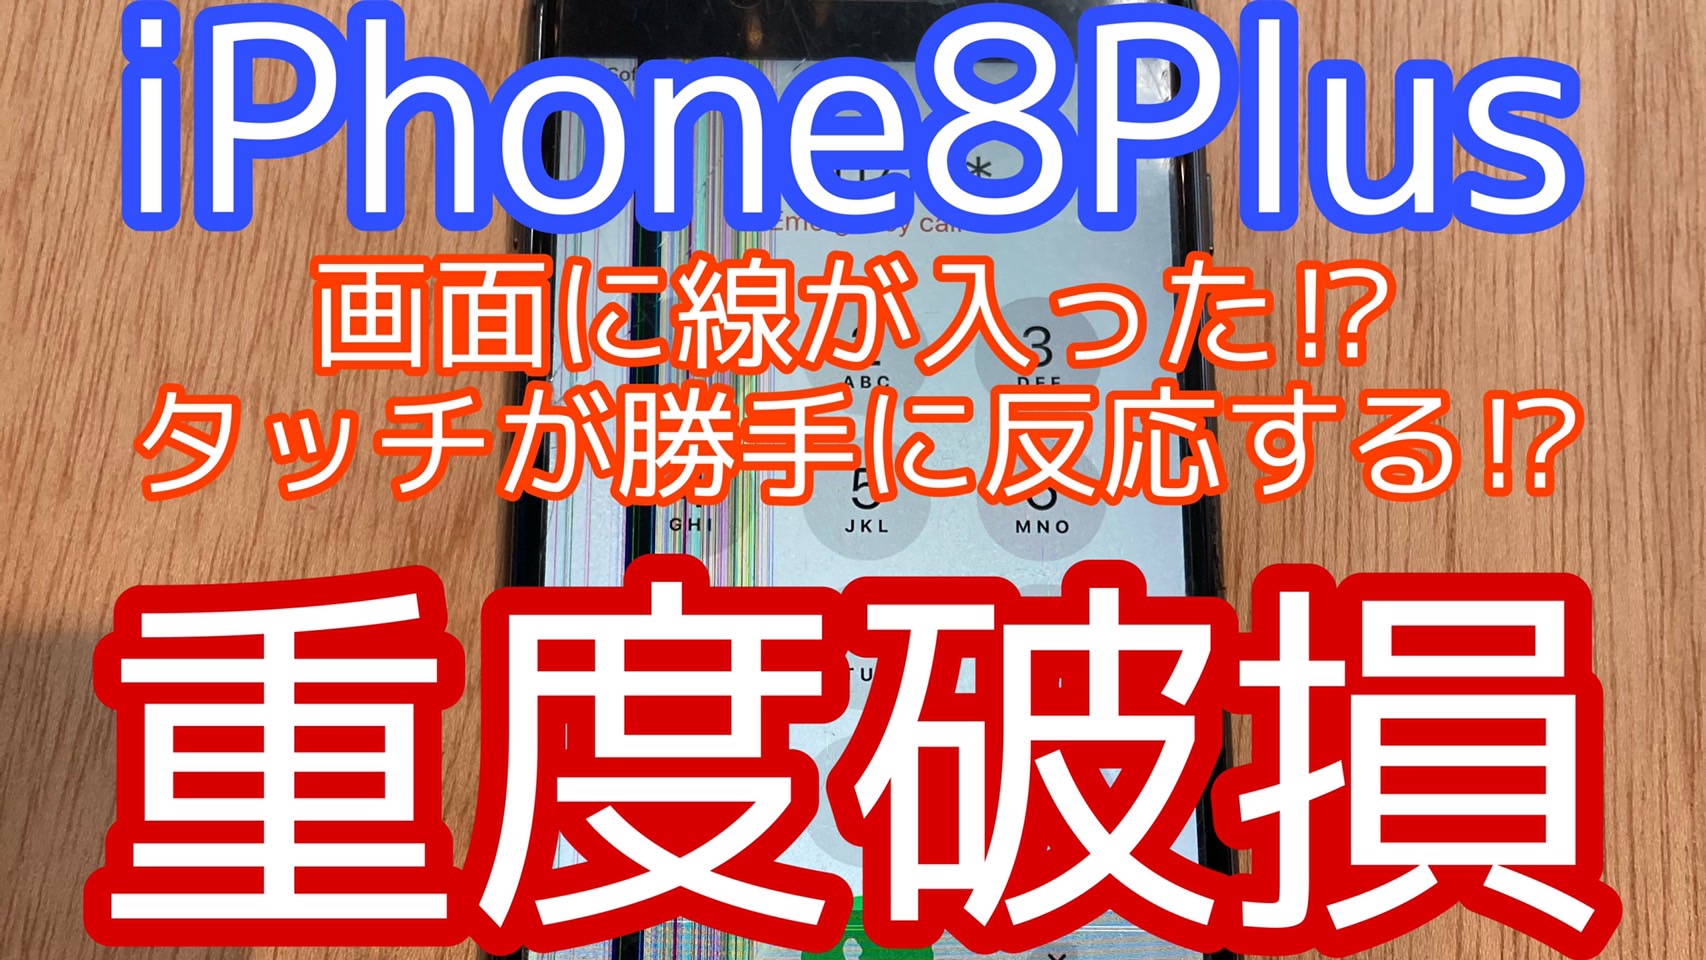 iPhone8Plusアイキャッチ画像